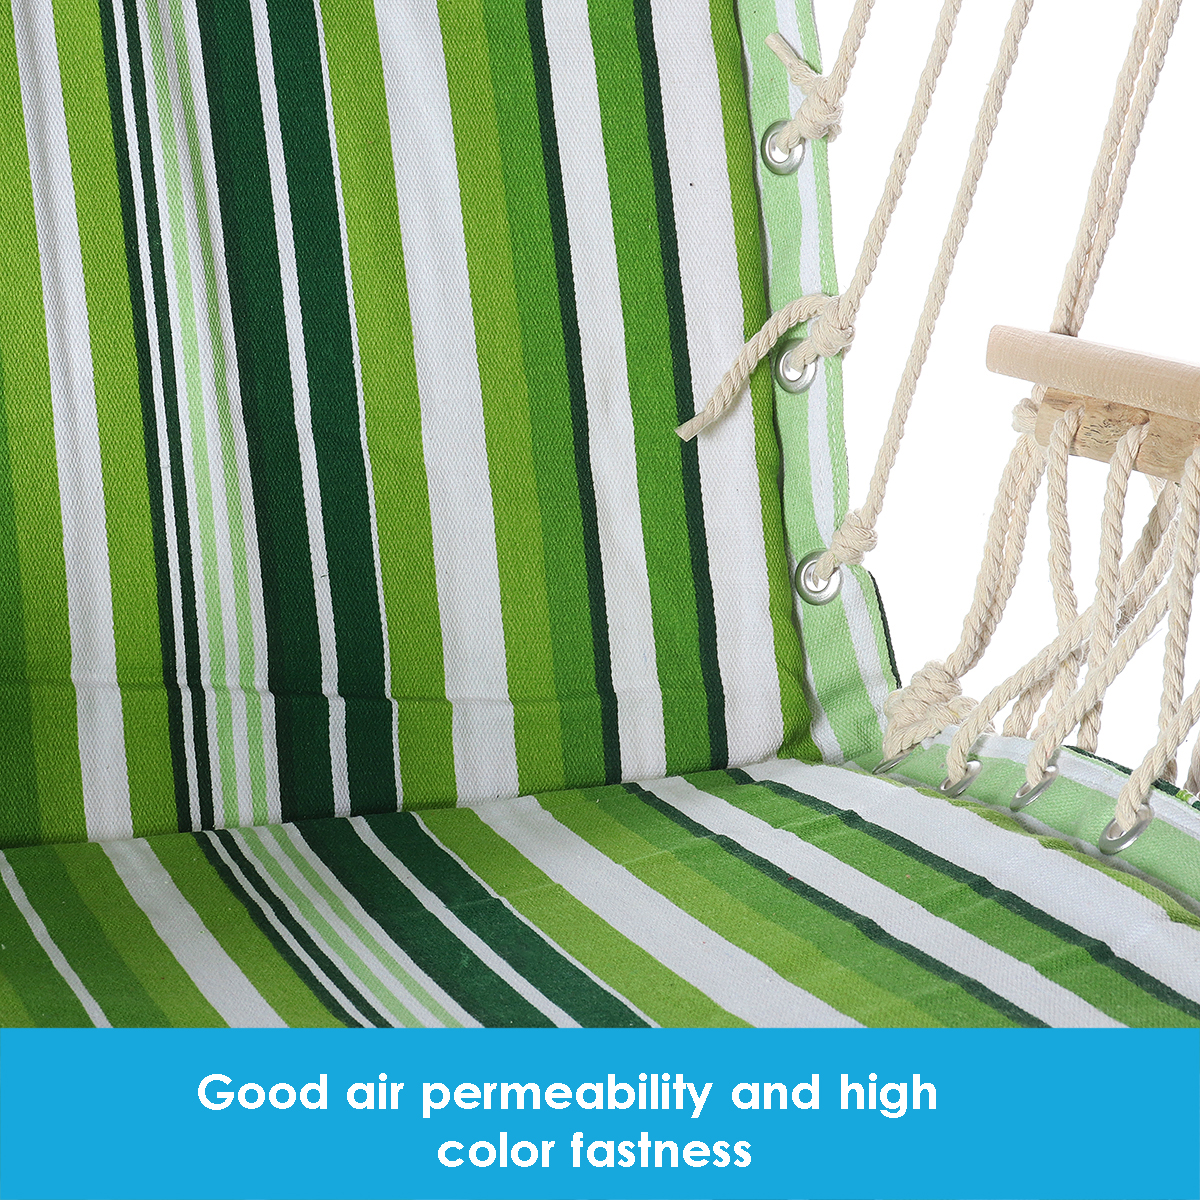 Cotton-Hammock-Chair-Comfortable-Hanging-Swing-Seat-Swing-Cushion-Outdoor-Indoor-Garden-Max-Load-150-1741982-3